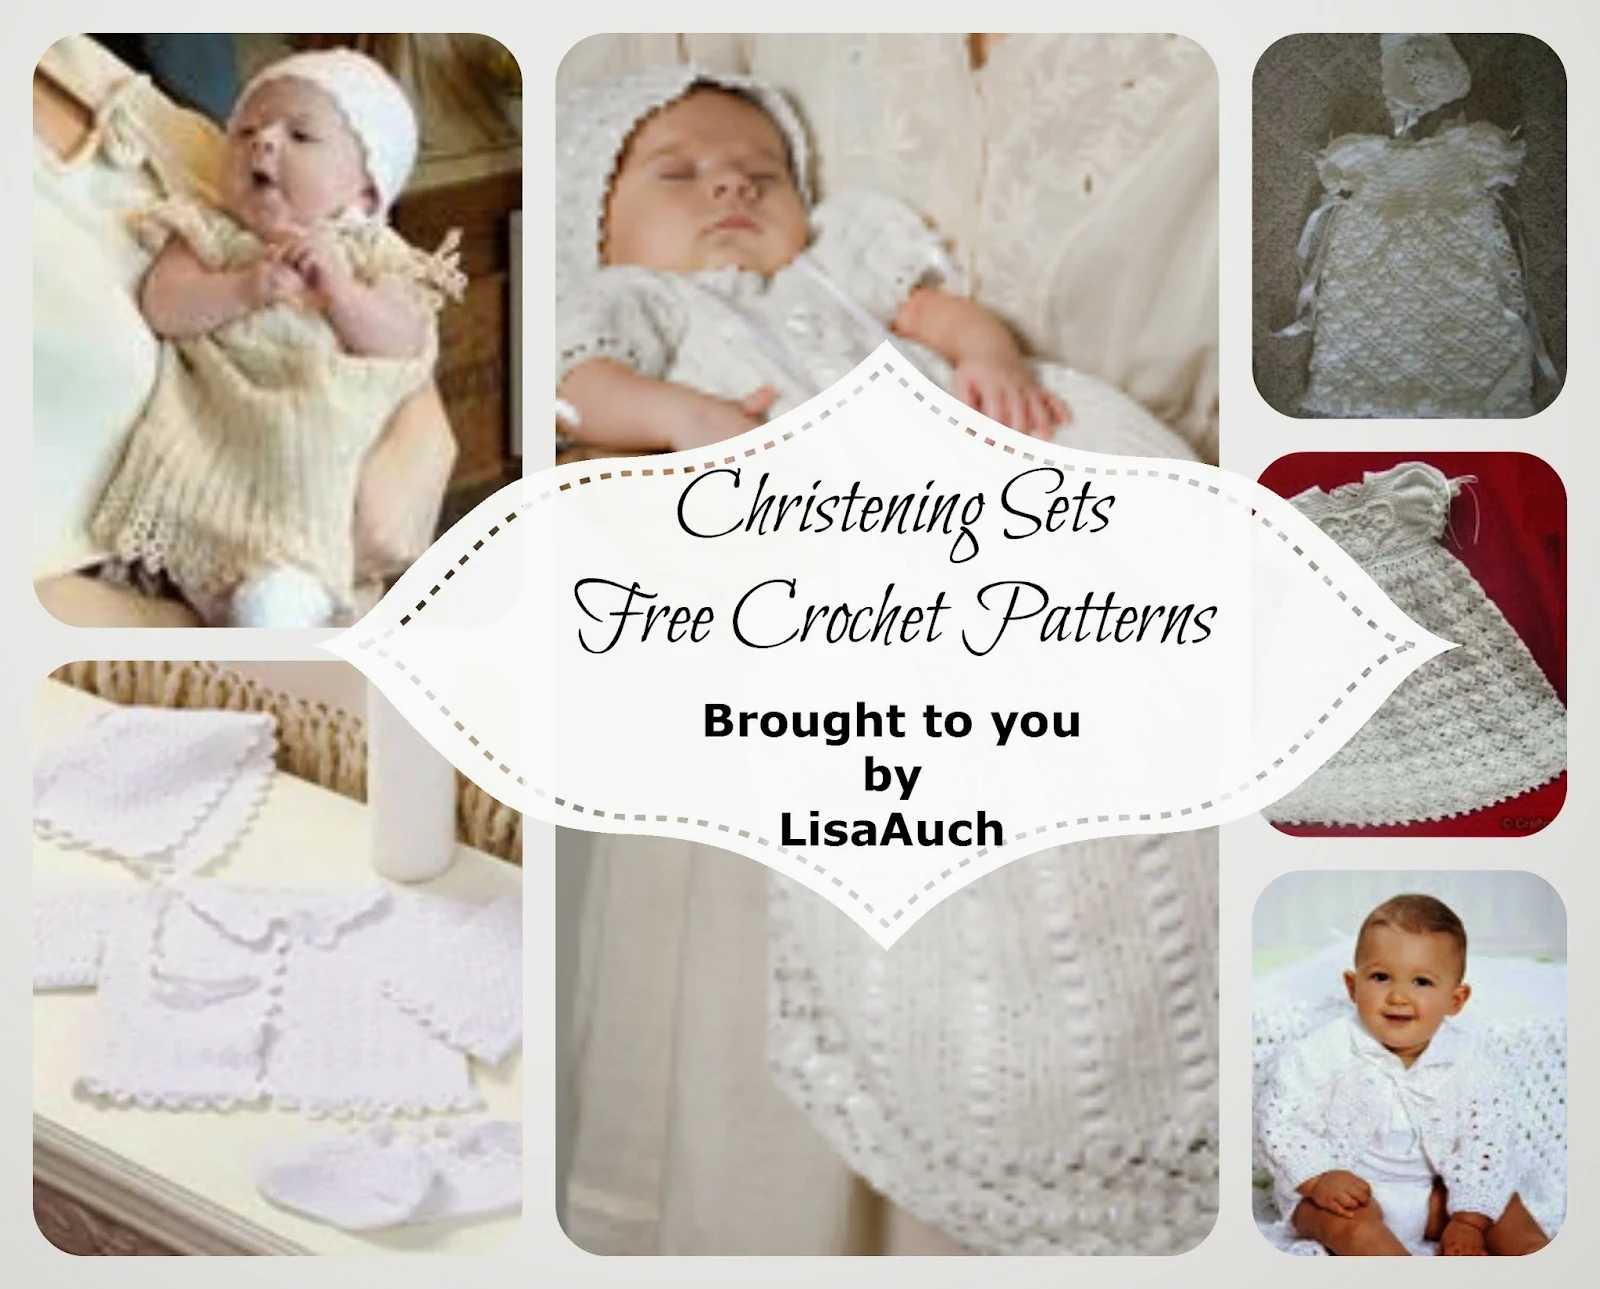 http://www.crochet-patterns-free.com/2013/12/free-crochet-christening-gown-patterns.html